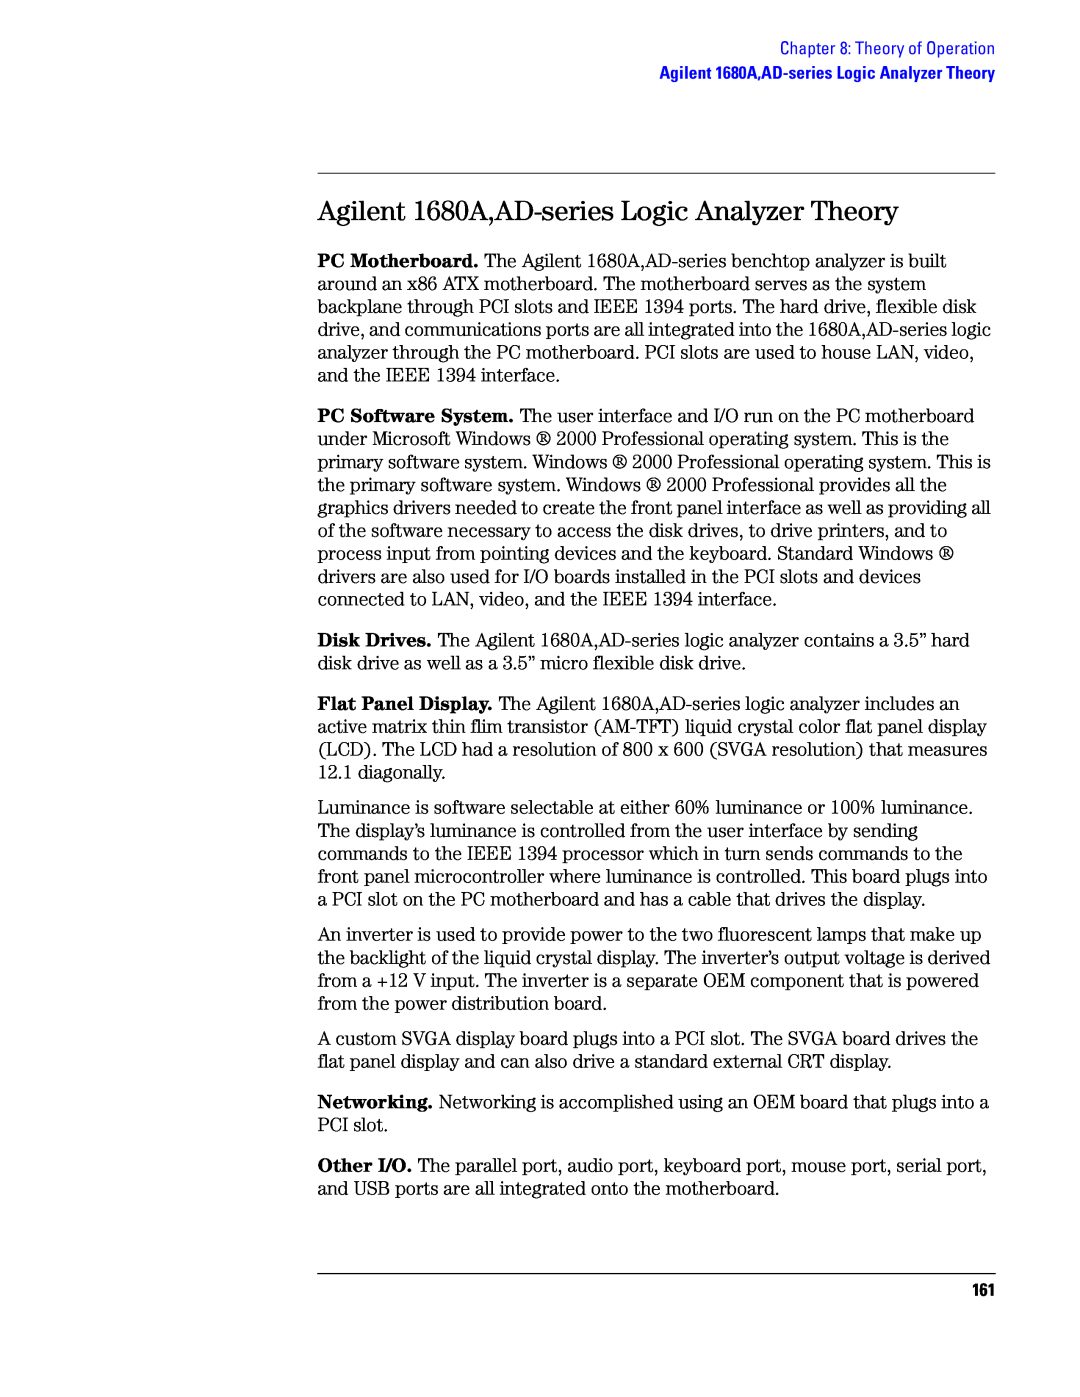 Agilent Technologies 1690 manual Agilent 1680A,AD-series Logic Analyzer Theory 